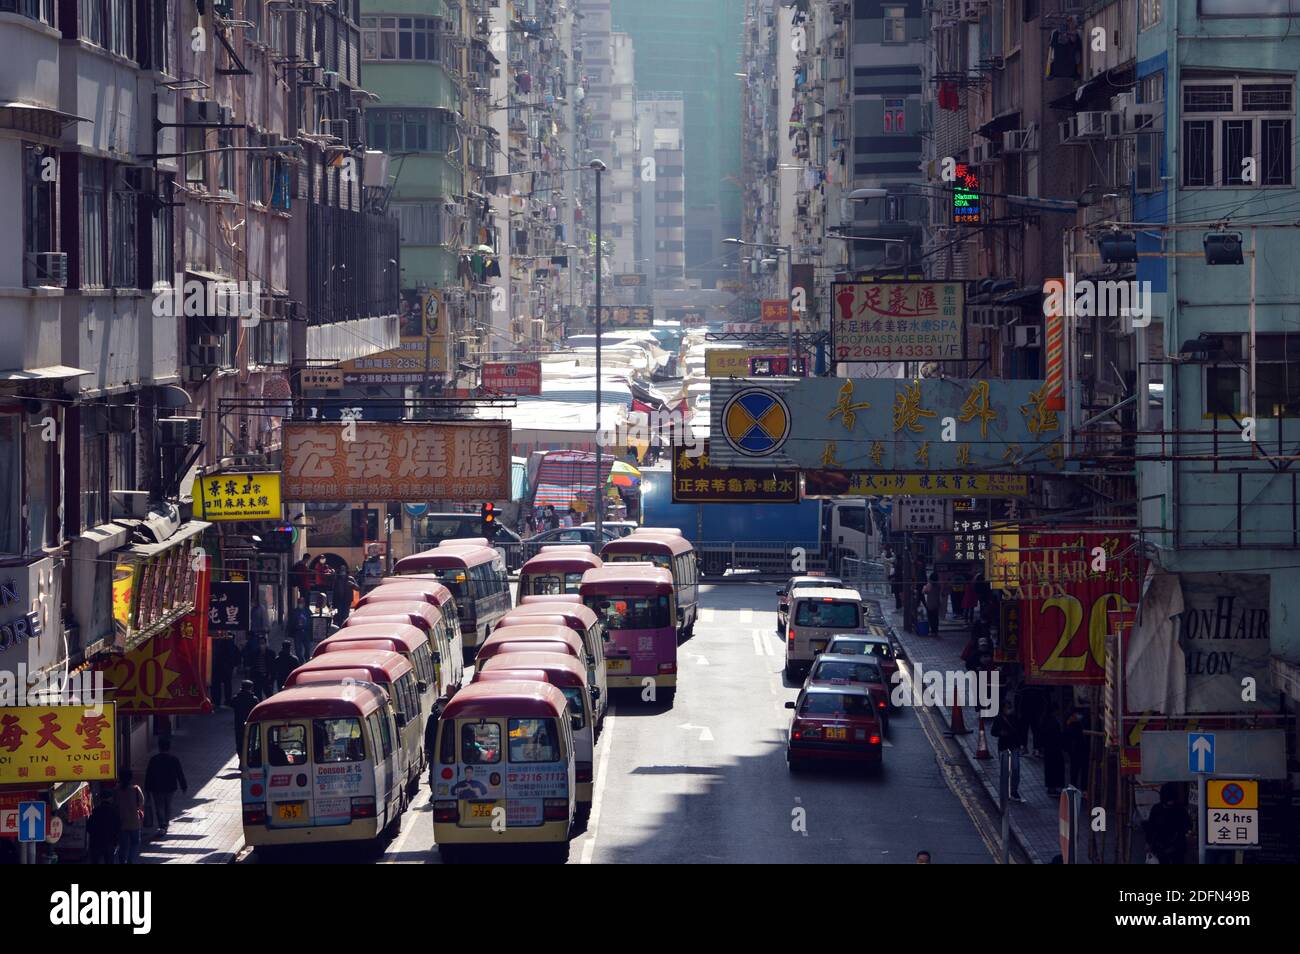 Minibus e bancarelle di mercato in Tung Choi Street a Mong Kok, Kowloon, Hong Kong Foto Stock